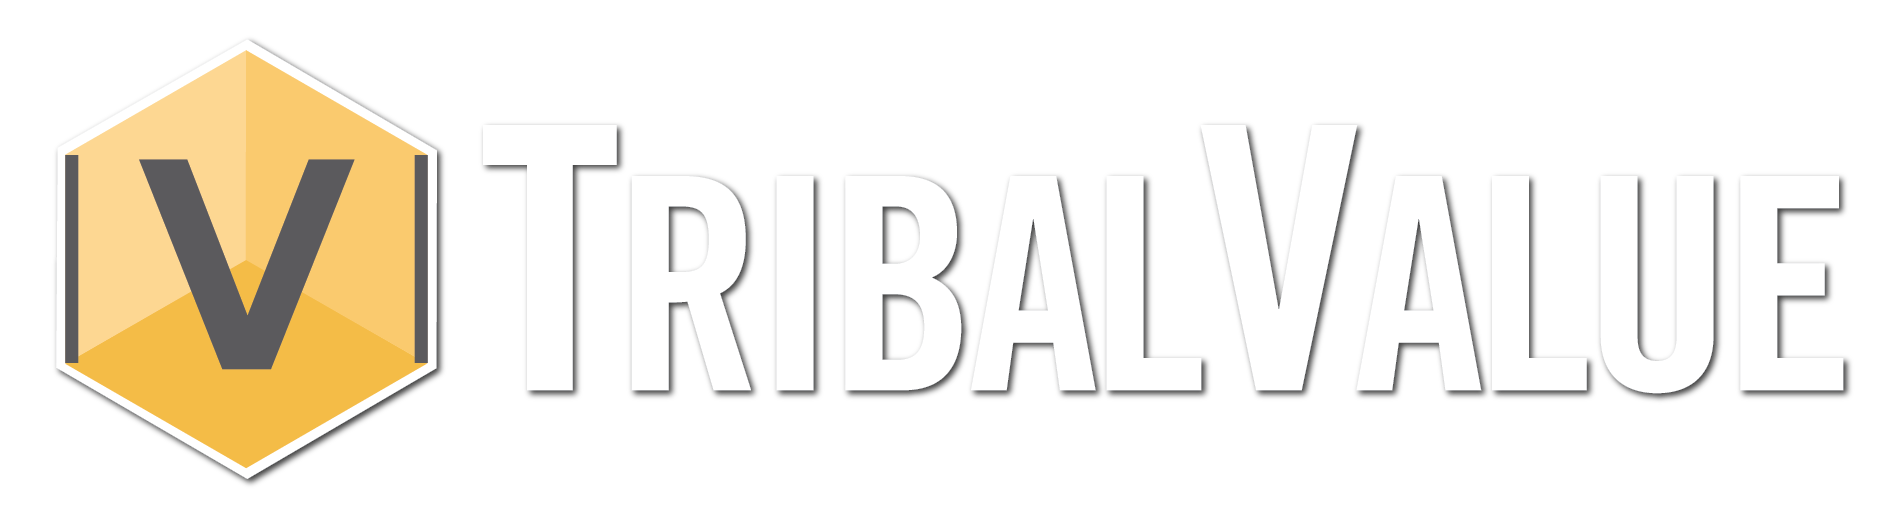 Logo_Tribal Value_Horizontal _White Text_Transparent